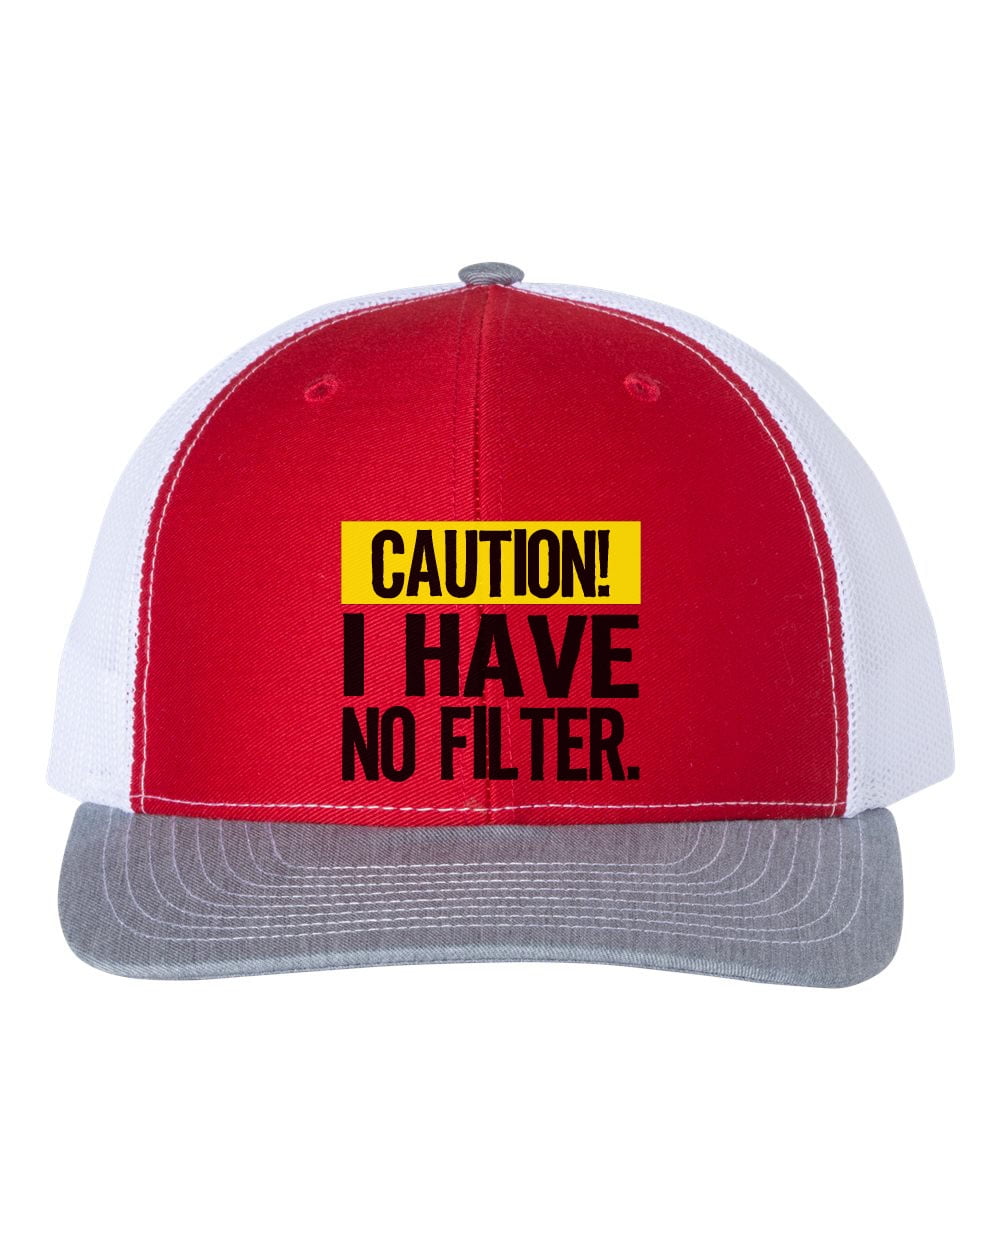 Caution I Have No Filter, No Filter Hat, Snapback, Trucker Hat